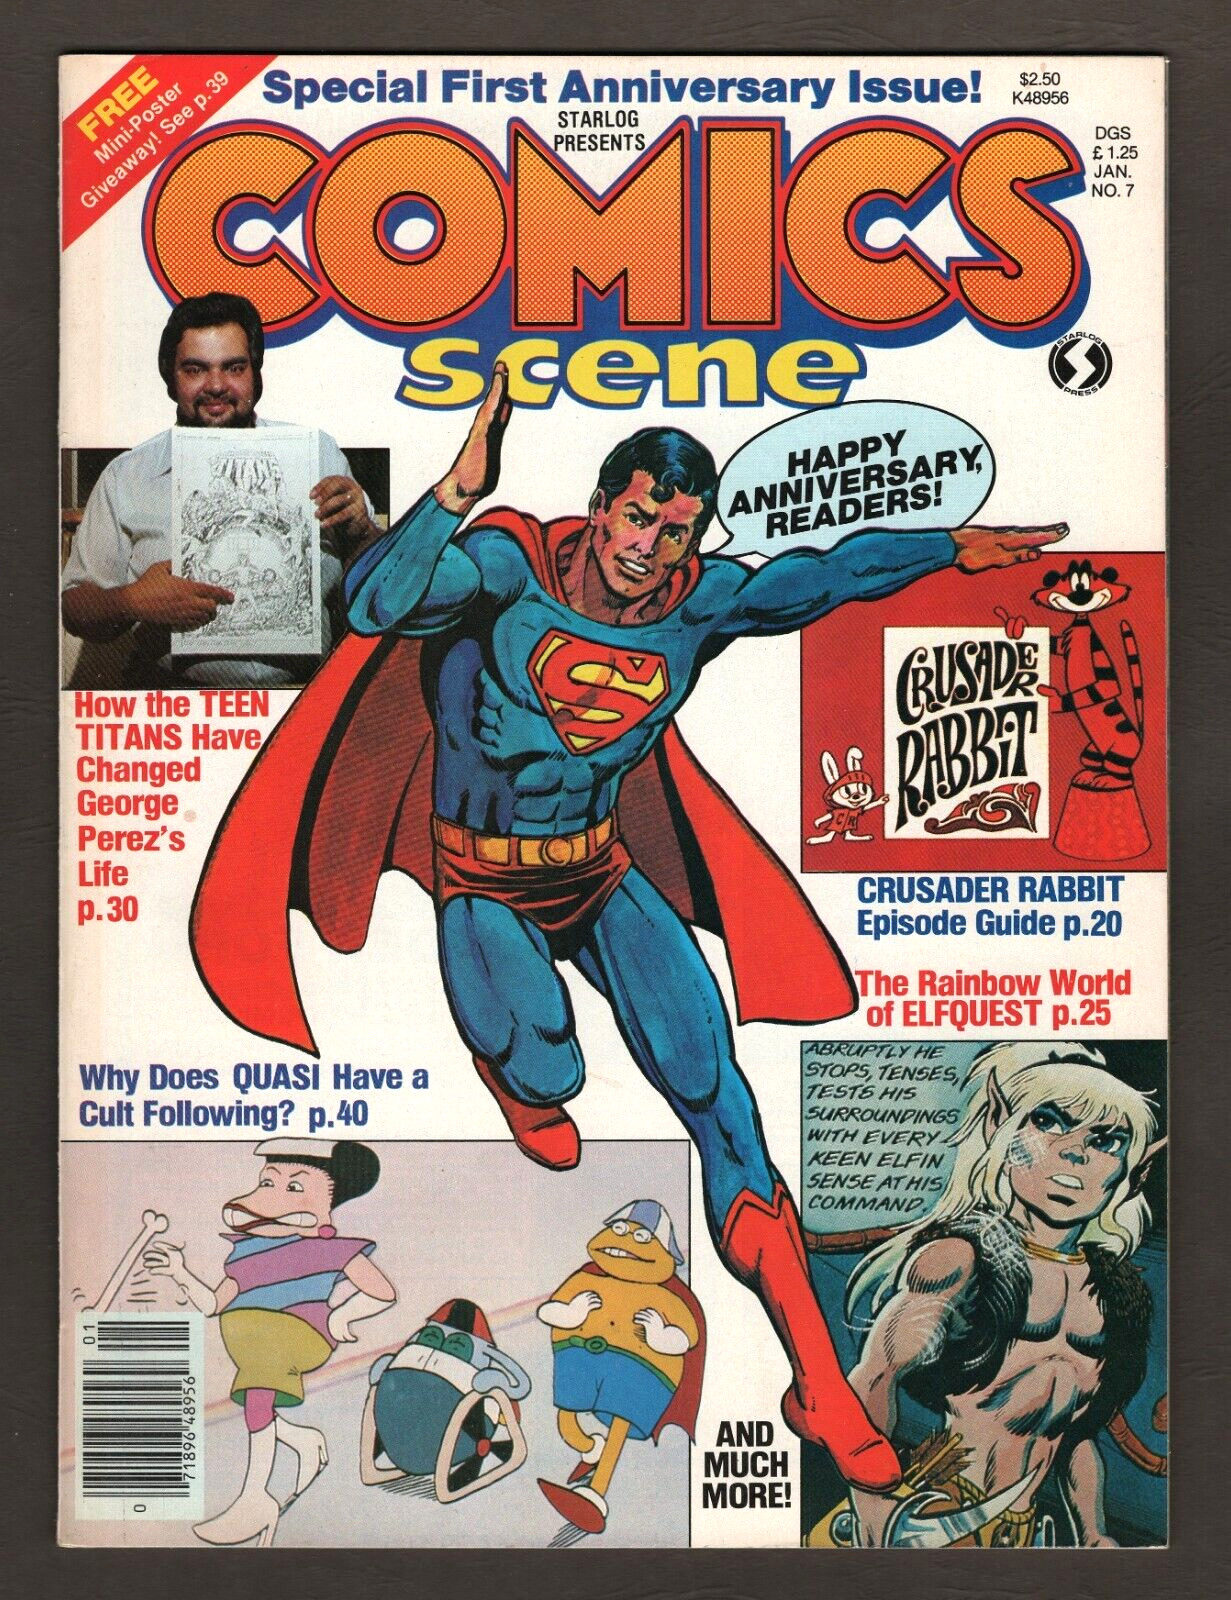 January 1983 Starlog Presents Comics Scene #7 Magazine  #A636